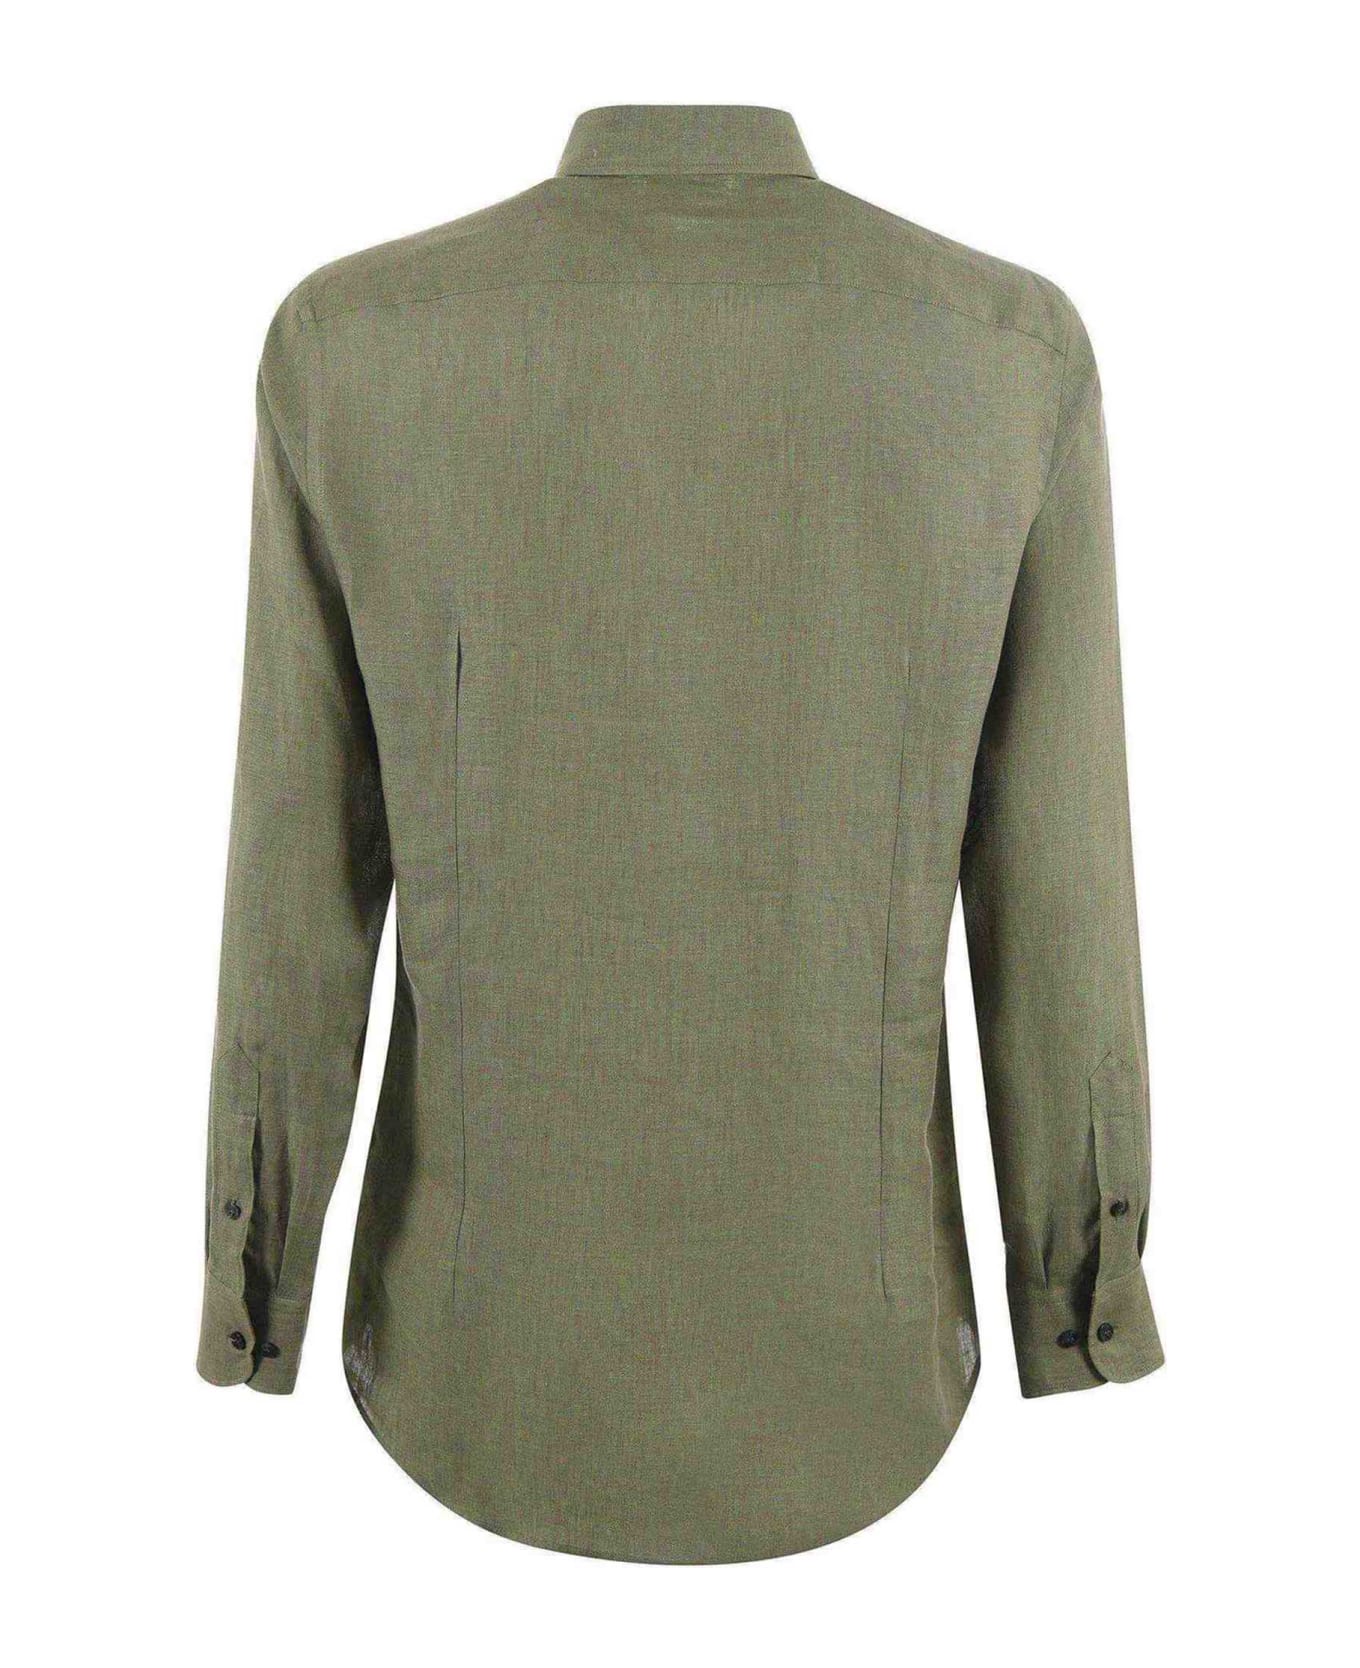 Etro Linen Shirt Military Green Iridescent - Verde militare シャツ